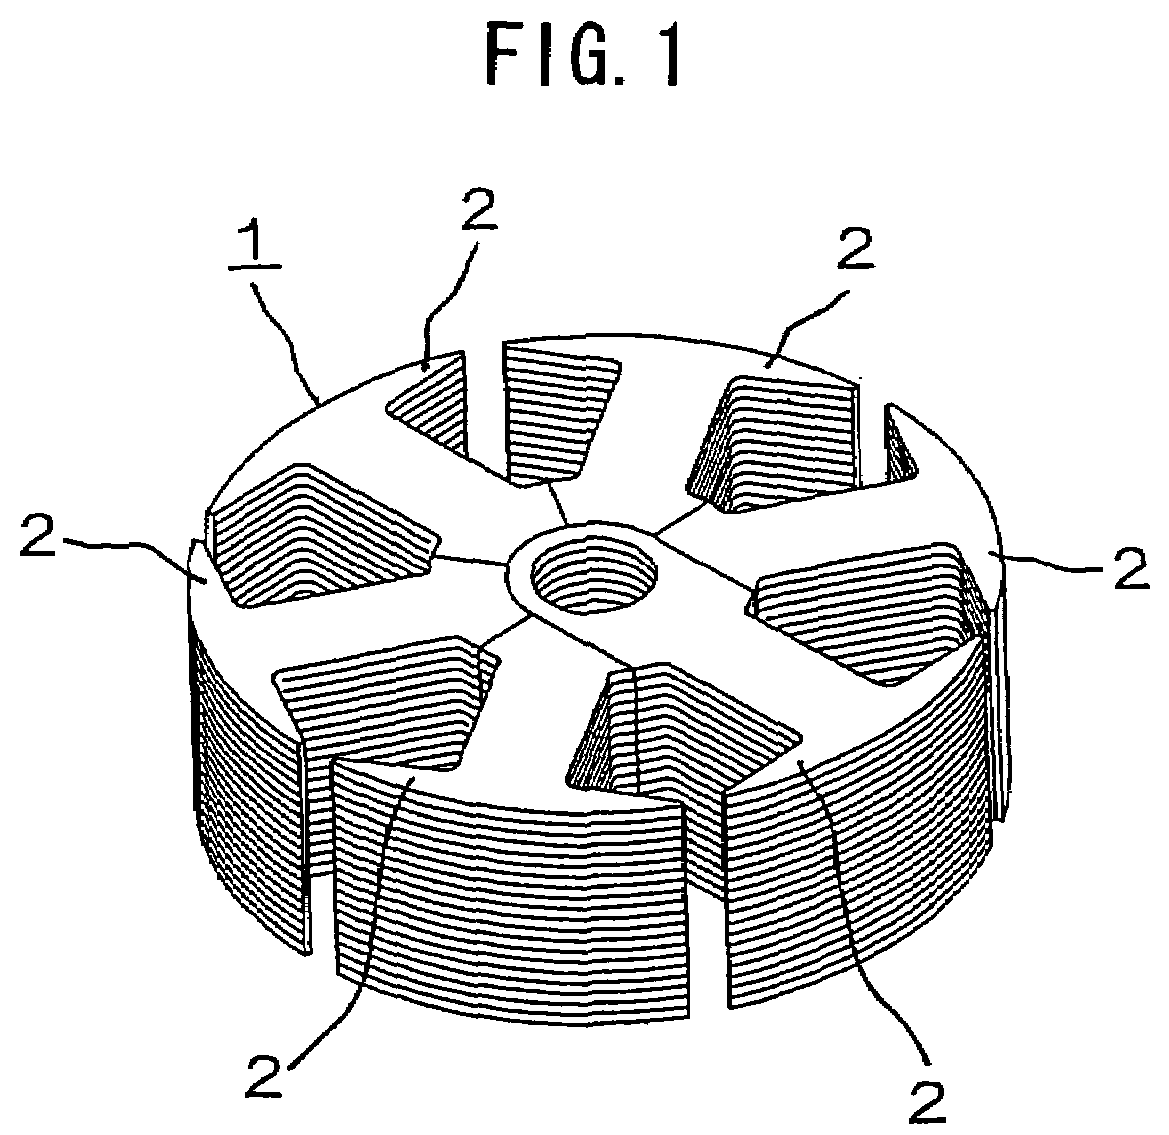 Armature core of rotating electric machine